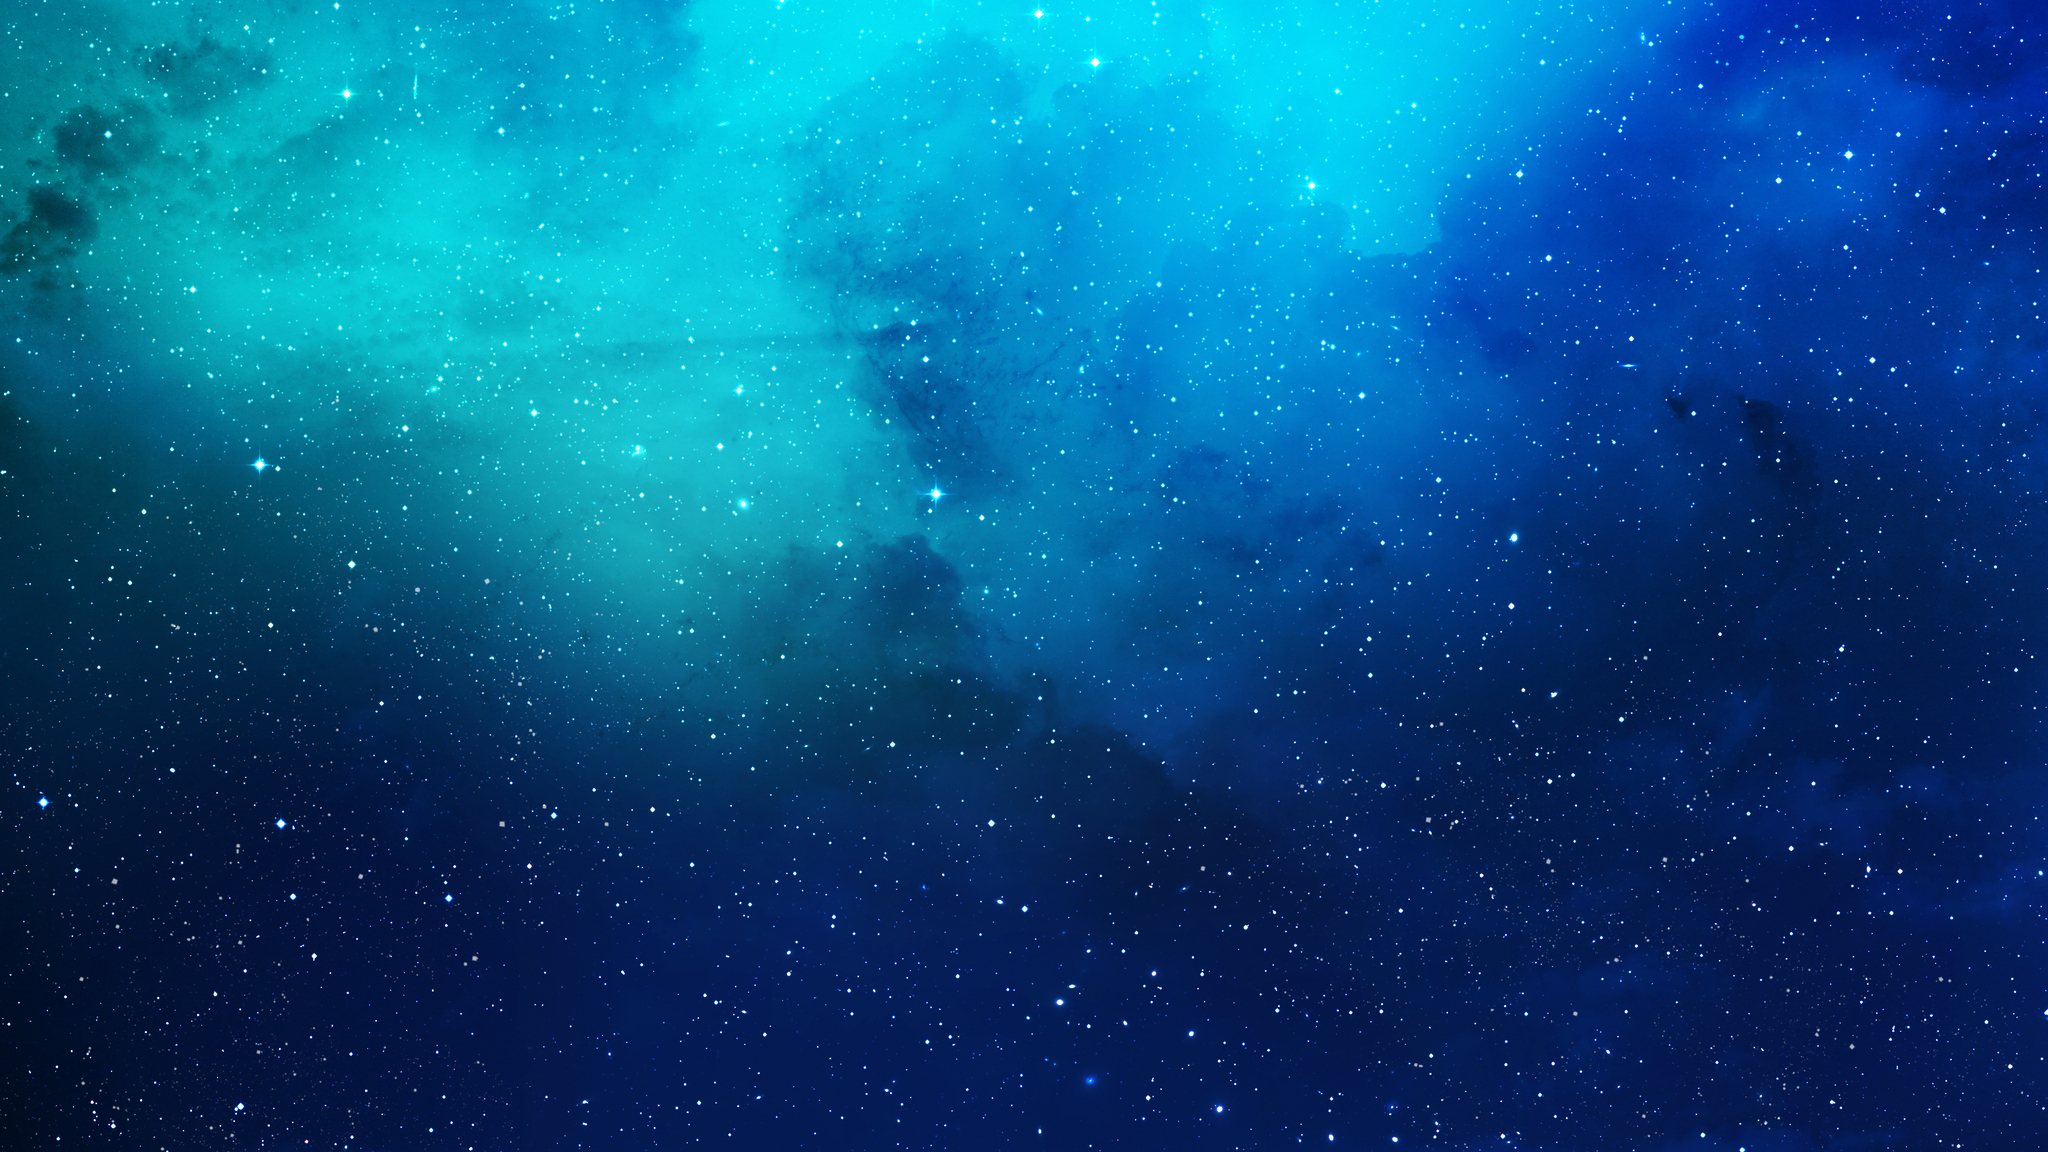 Nebula Blue Space In 2048x1152 Resolution. nebula-blue-space-1x.jpg. 